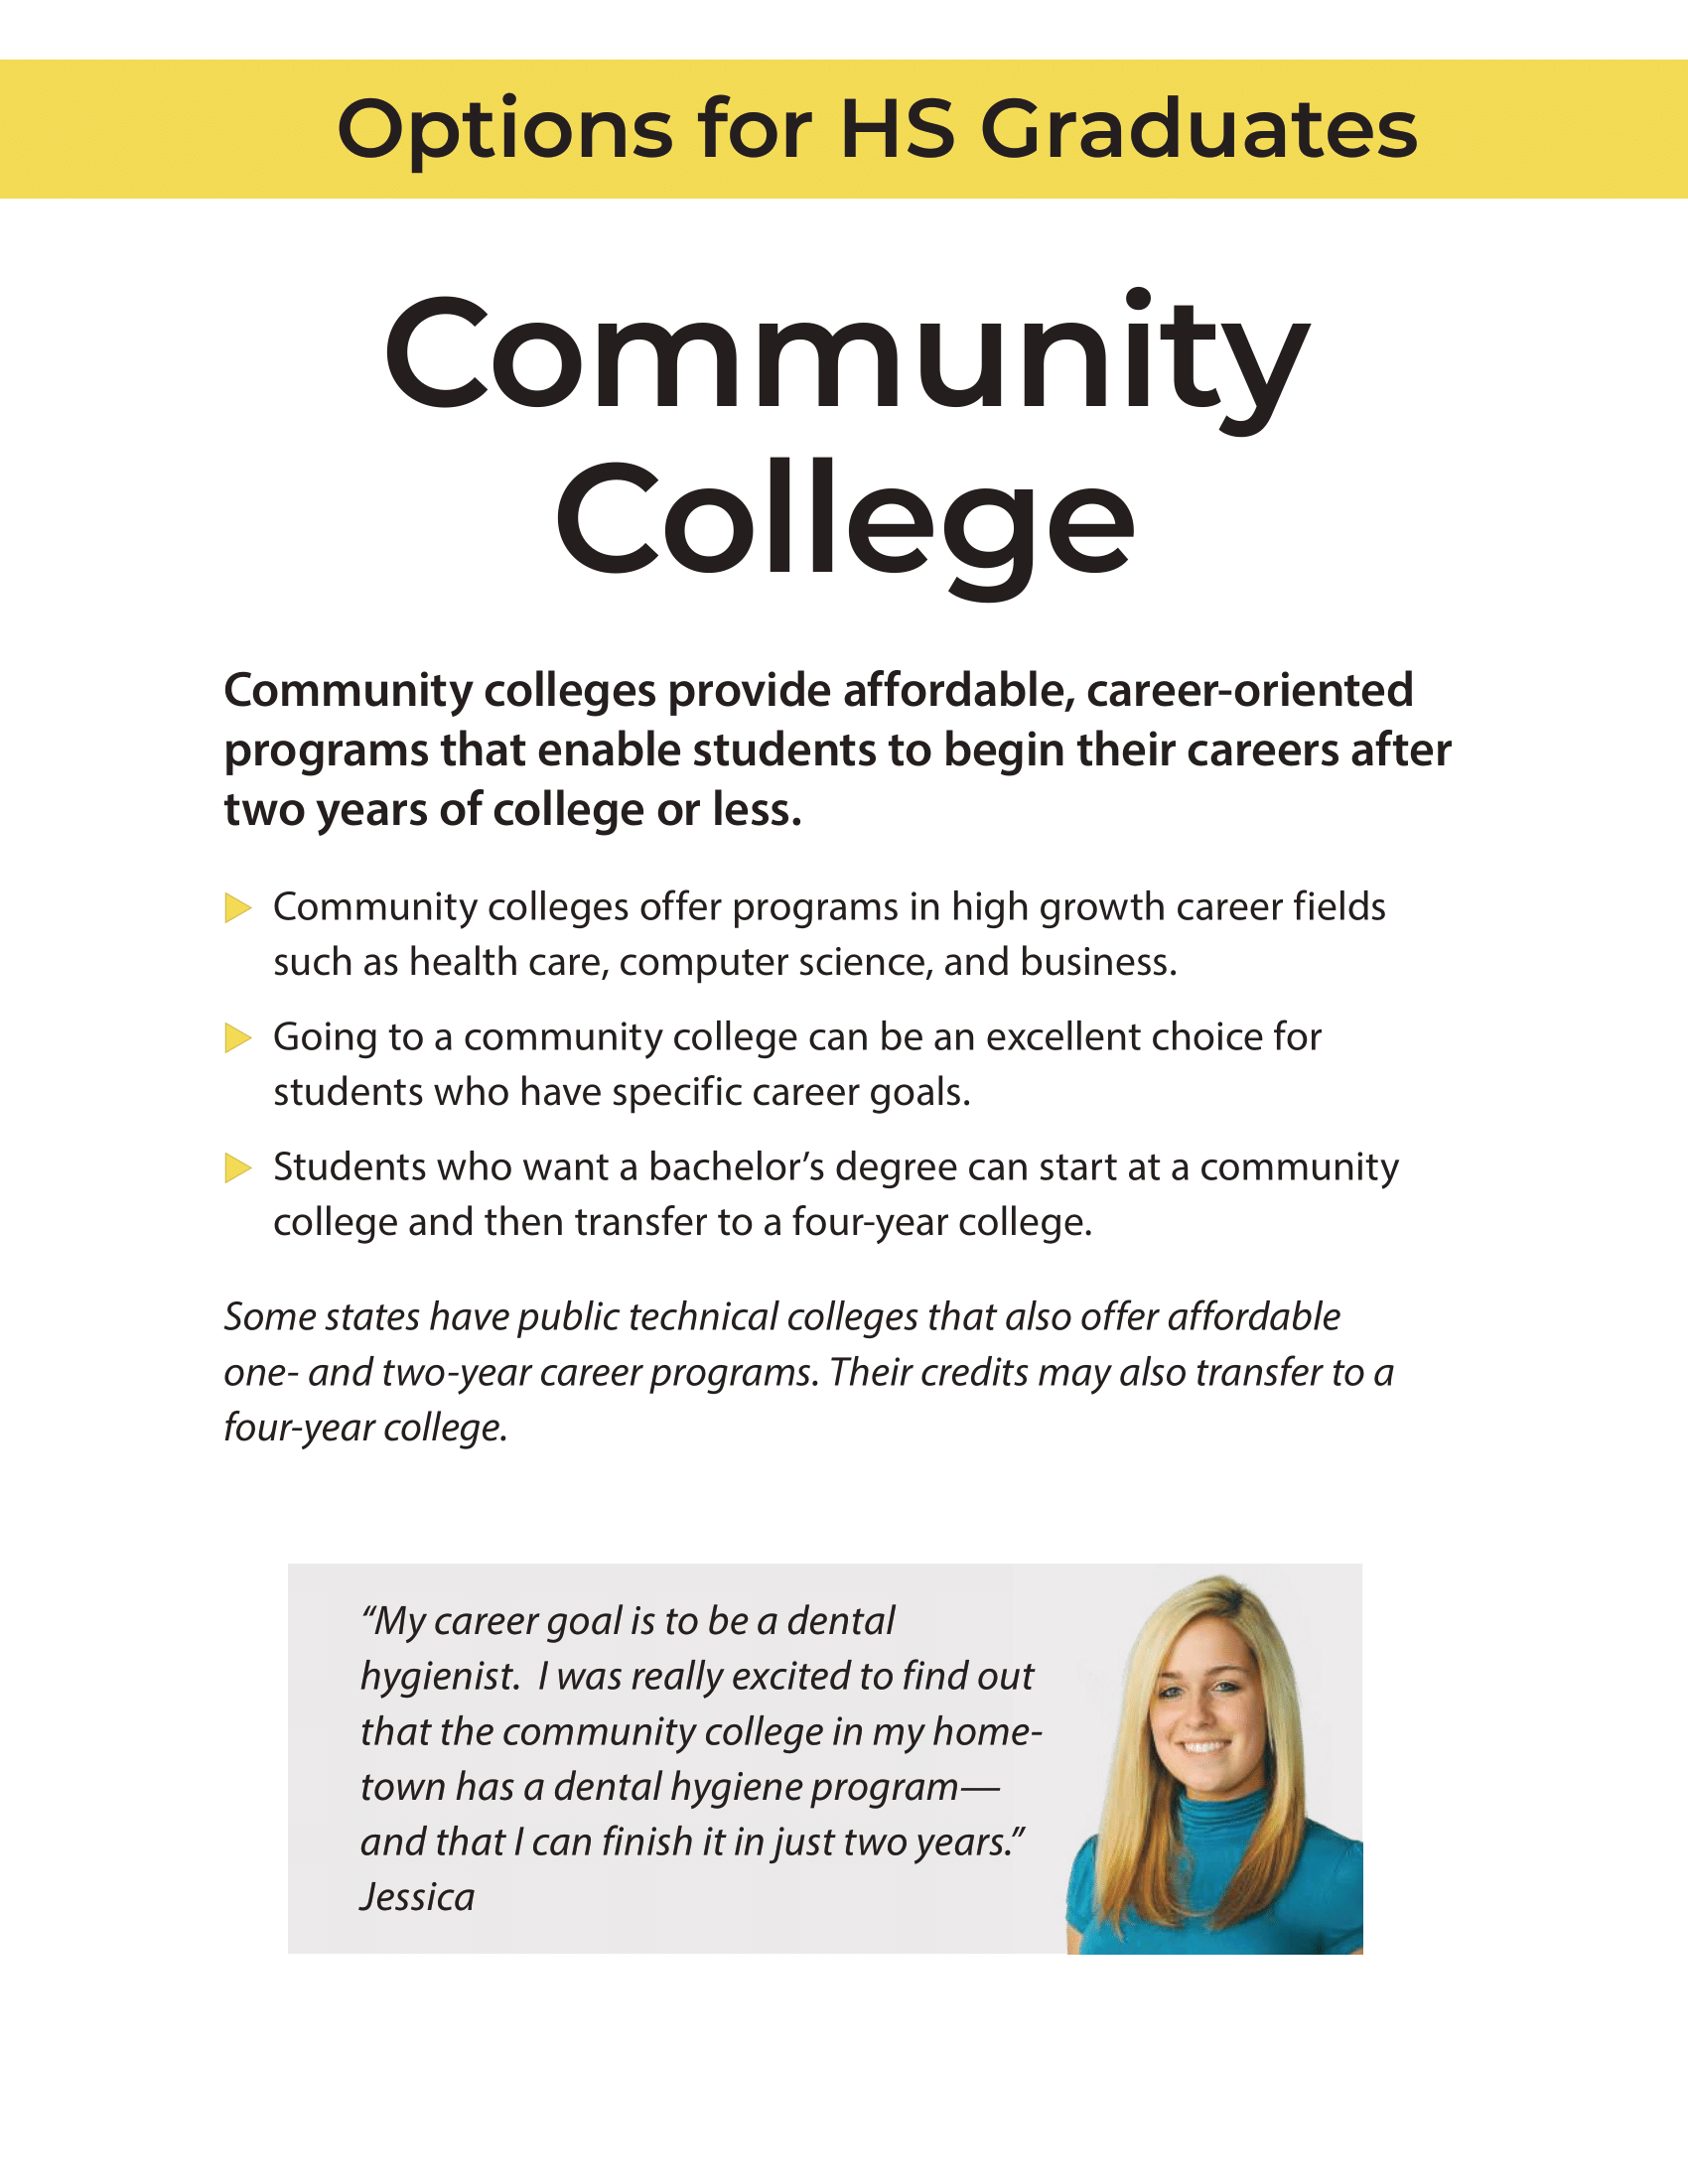 Options for HS Graduates - Community College